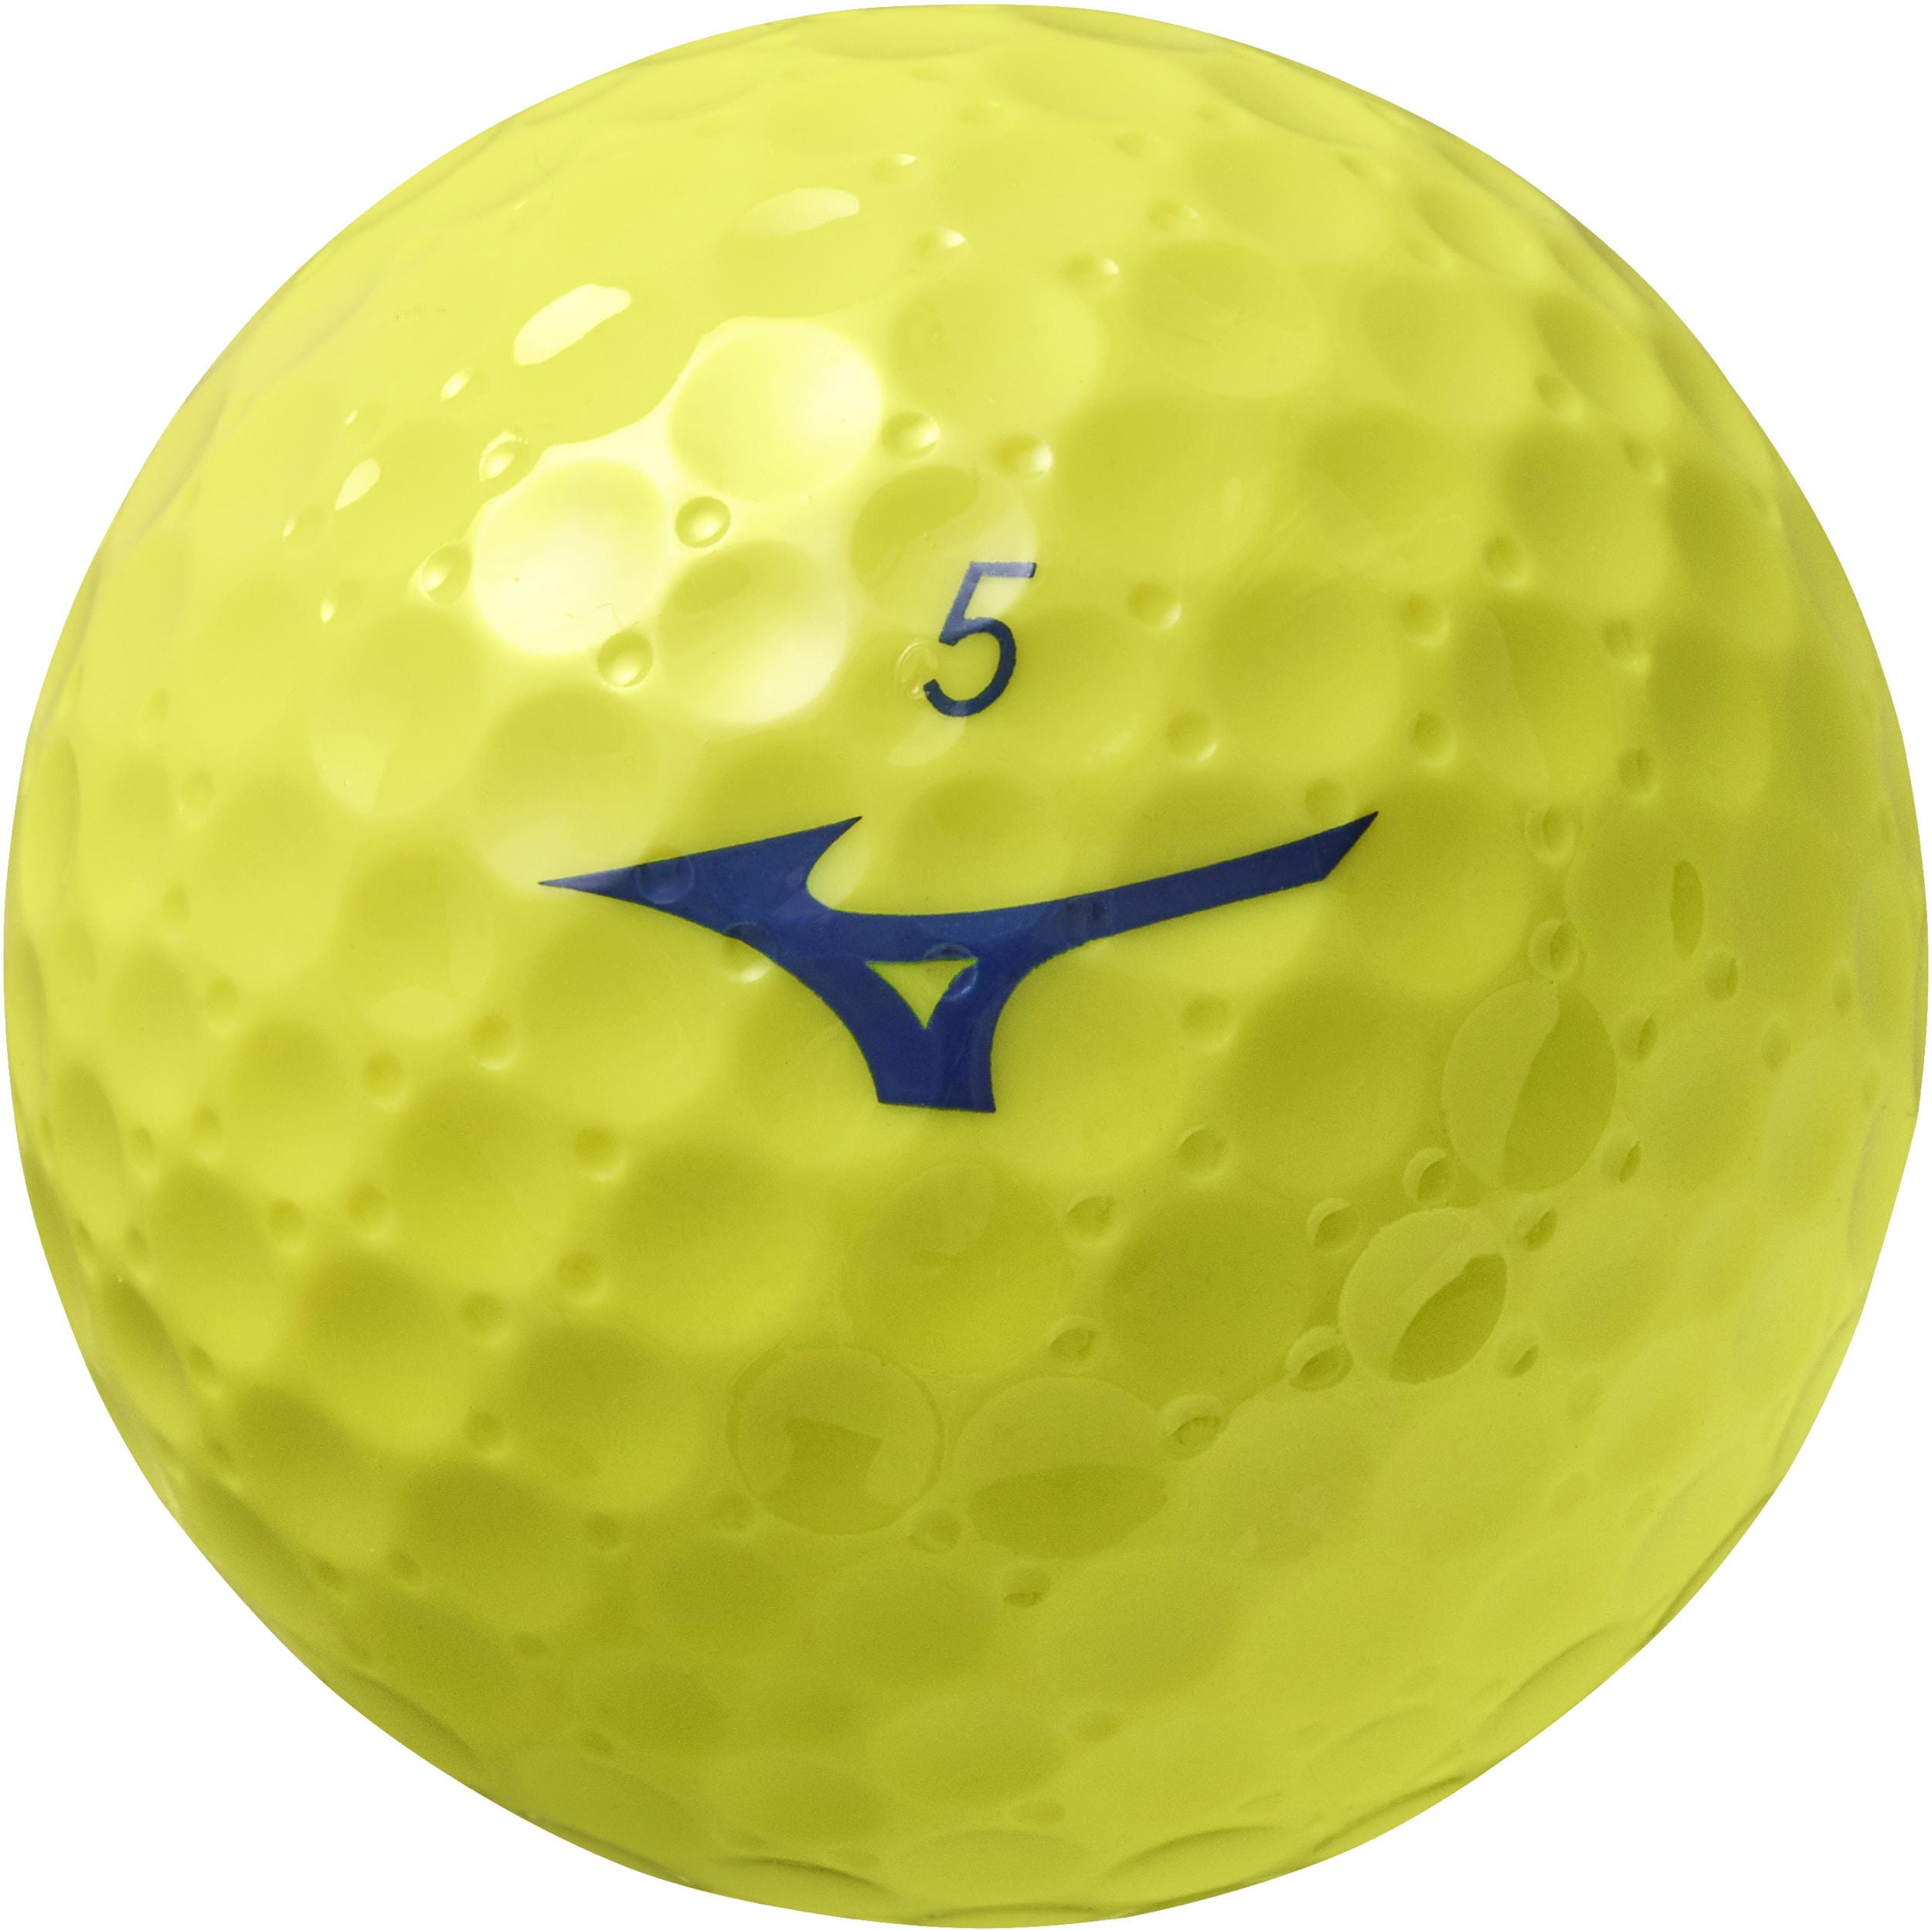 Mizuno RB 566 Golfbälle, yellow